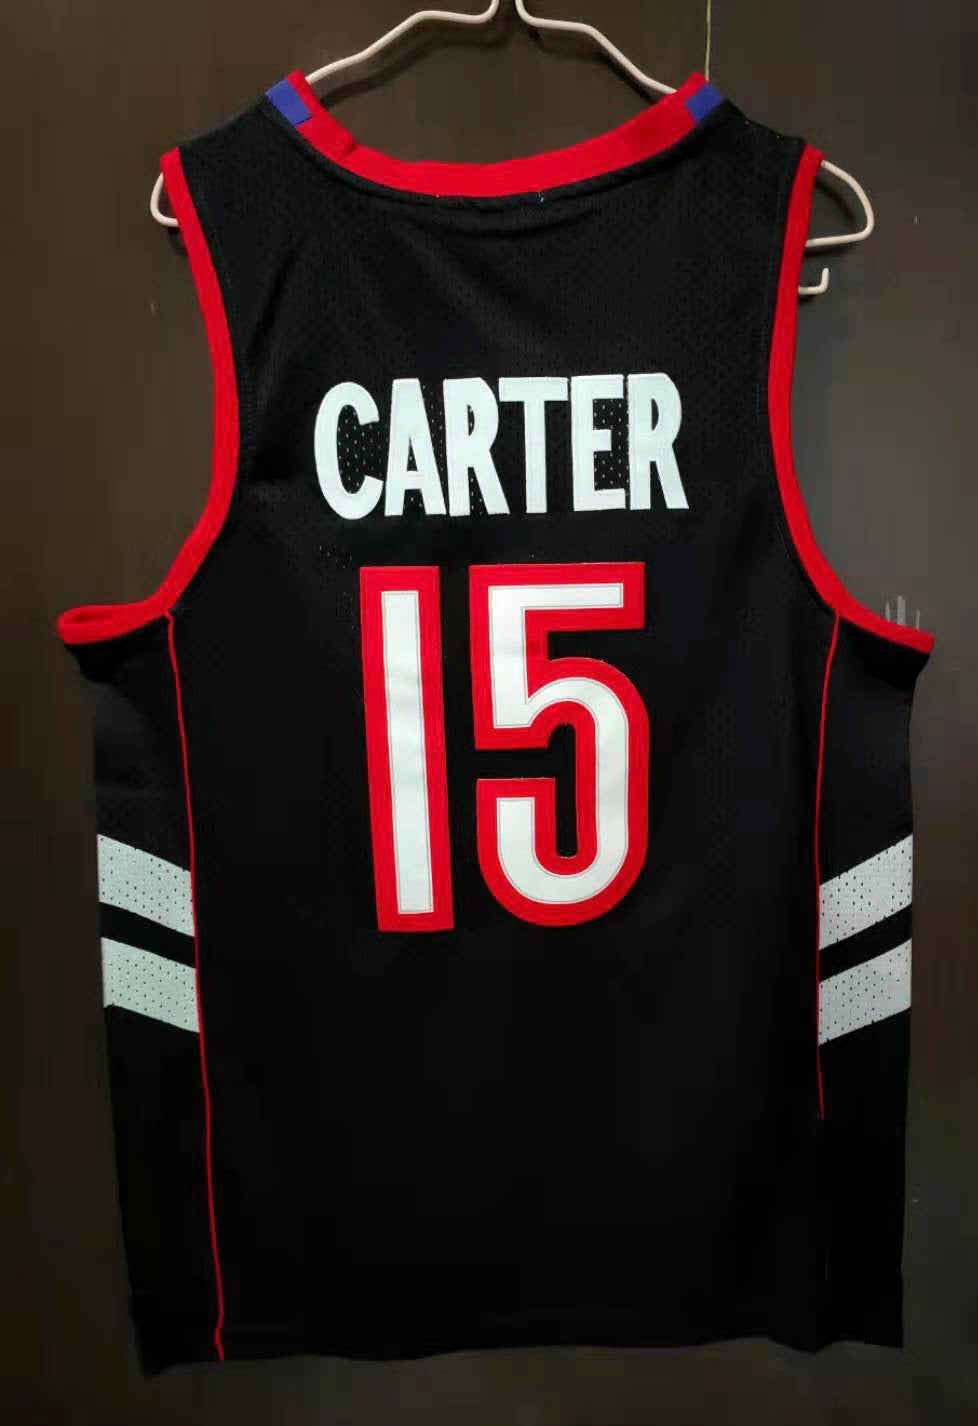 Vince Carter Toronto Raptors Jerseys, Vince Carter Raptors Basketball  Jerseys